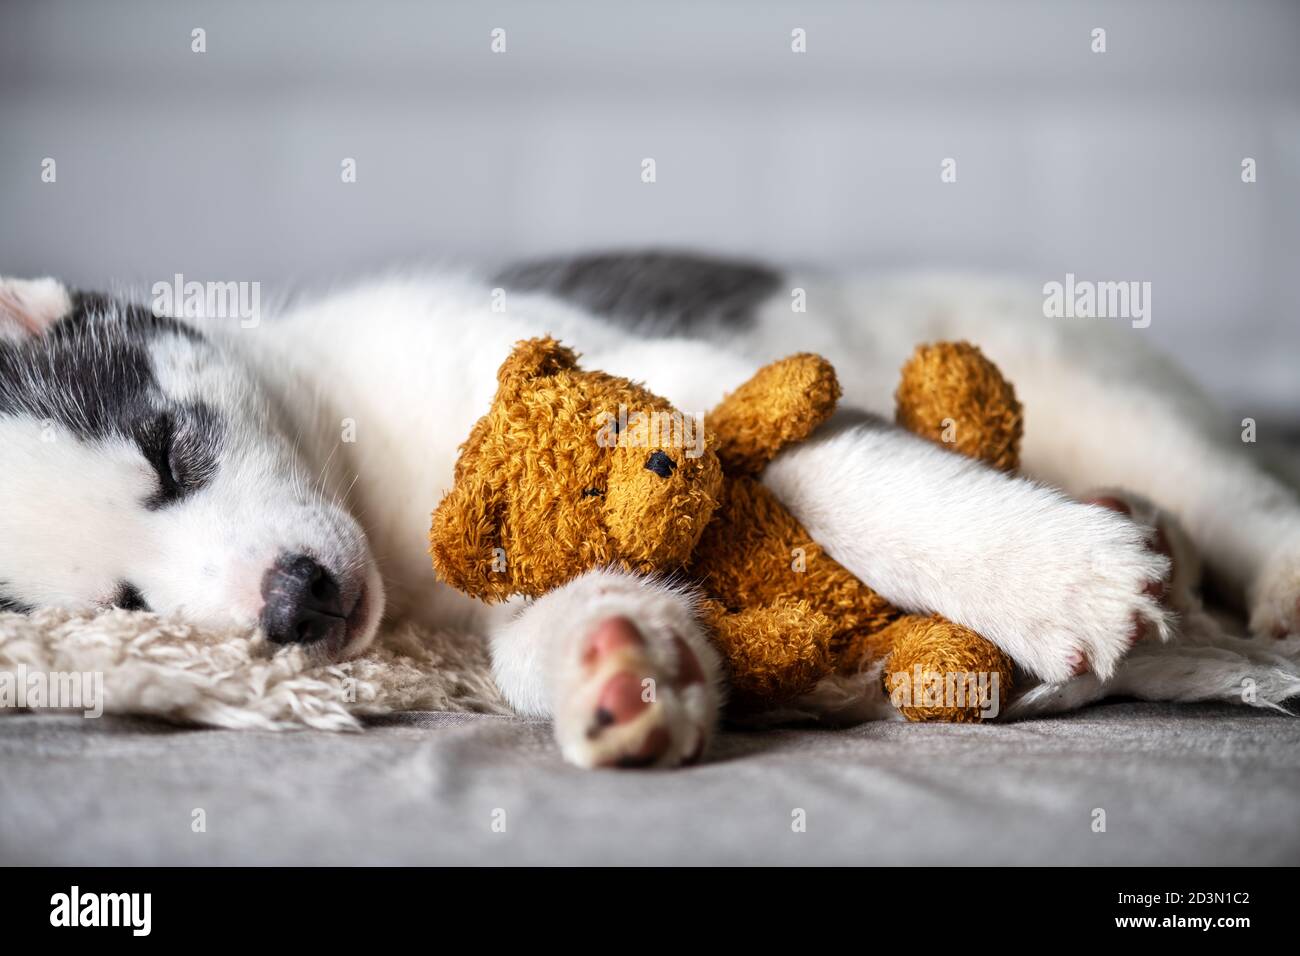 Small Dog With Teddy Stockfotos und -bilder Kaufen - Alamy